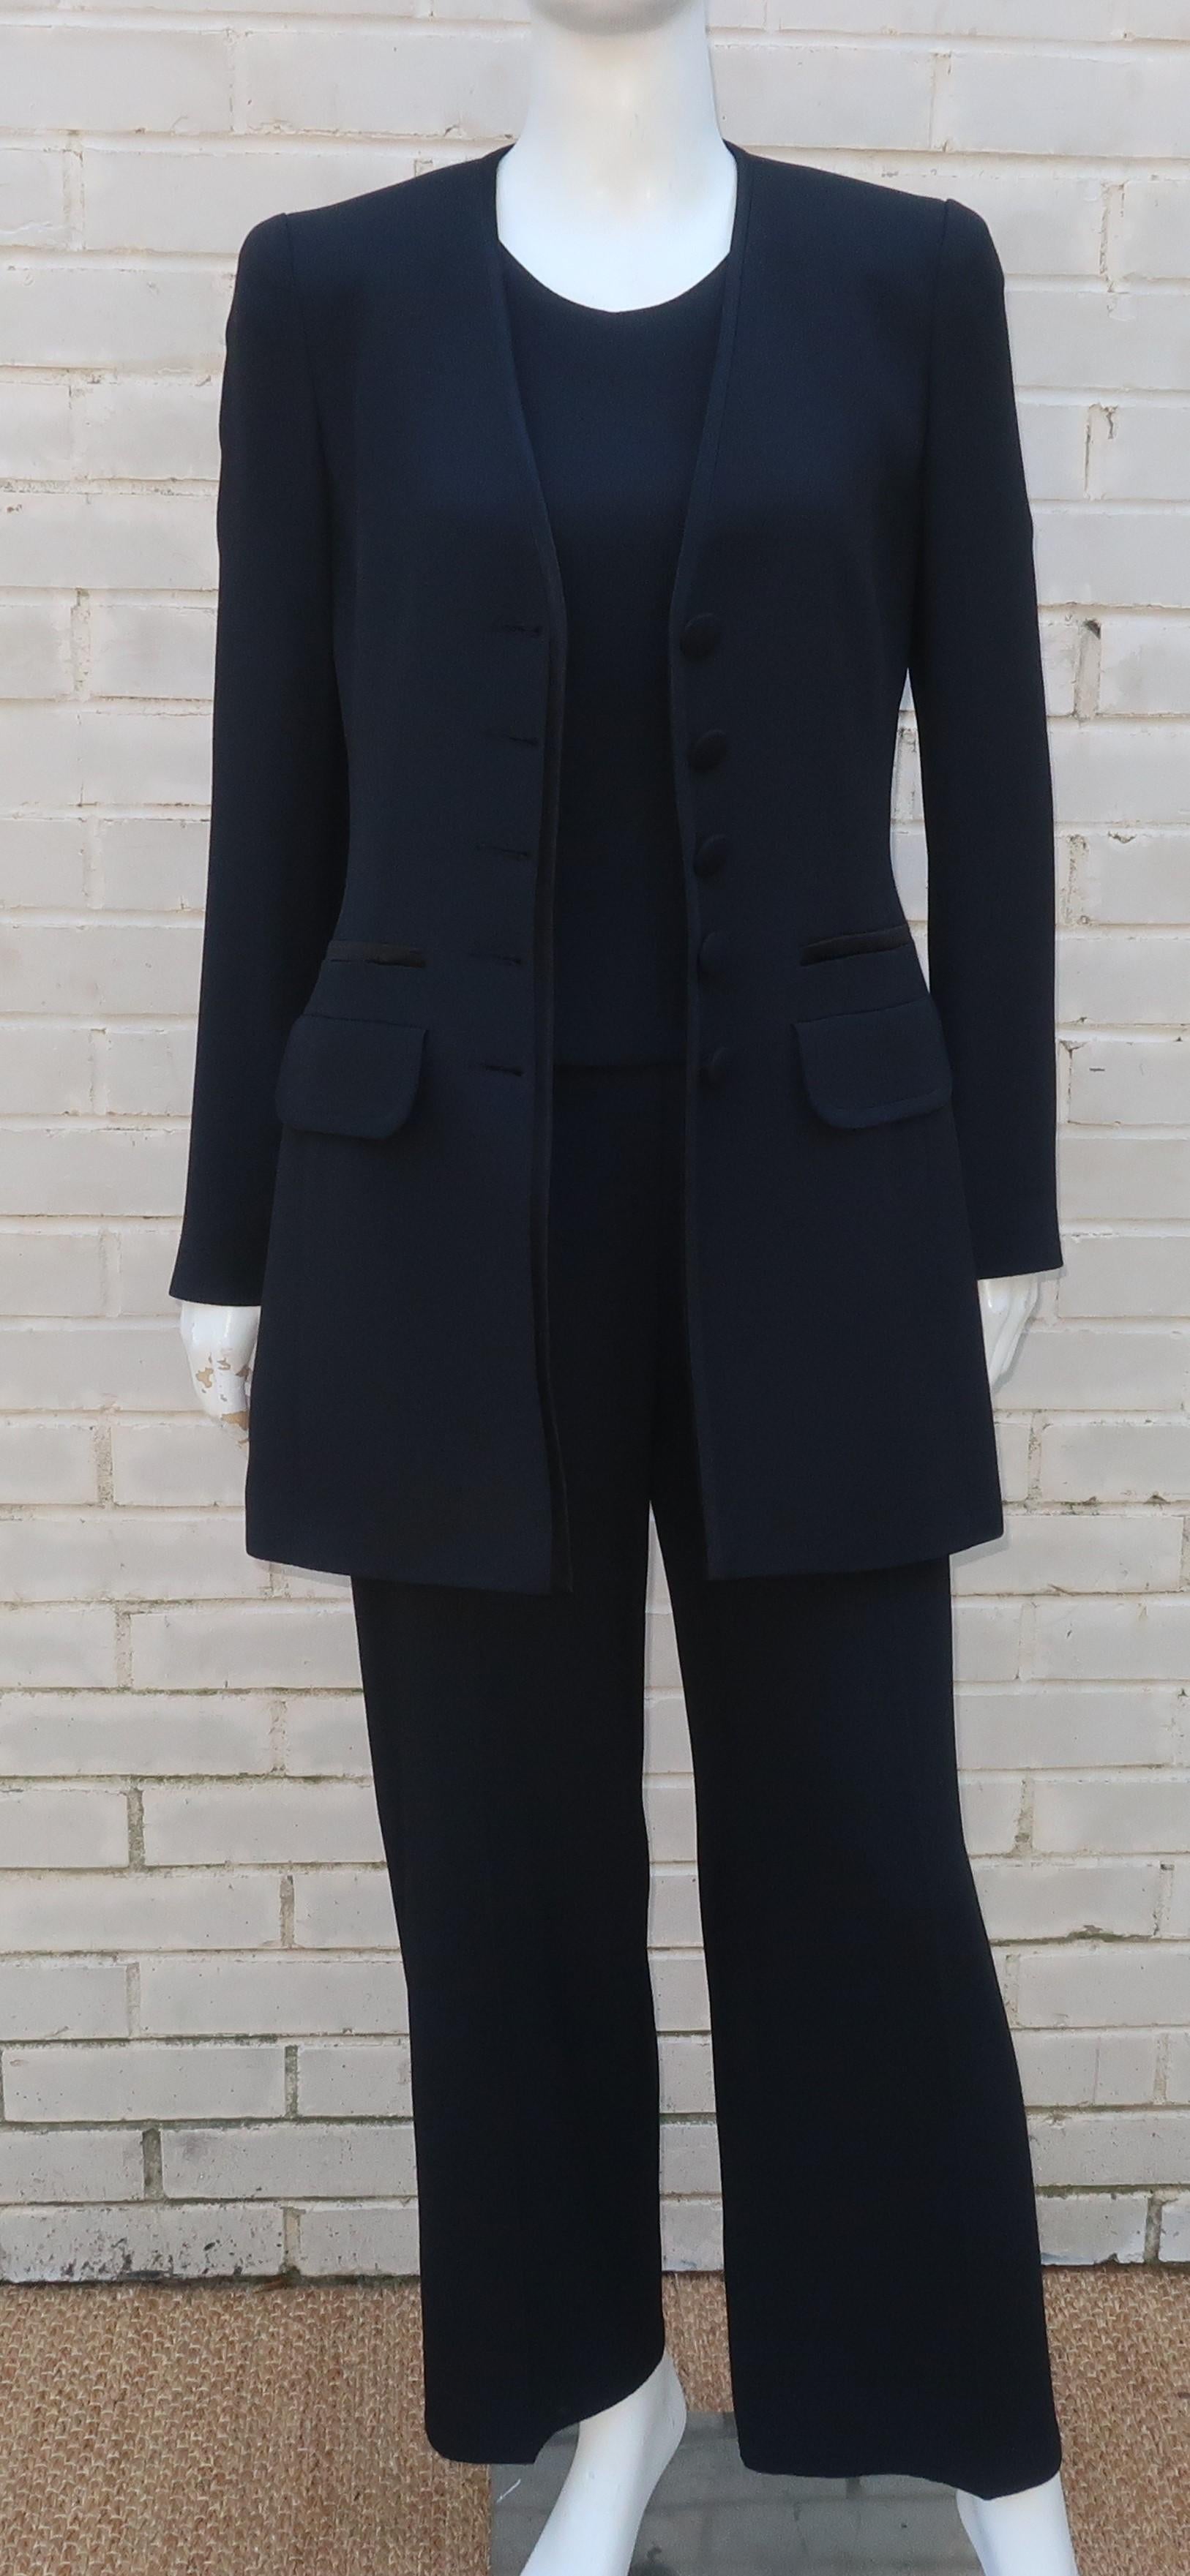 Sonia Rykiel Three Piece Tuxedo Style Black Pant Suit, 1980's In Good Condition For Sale In Atlanta, GA